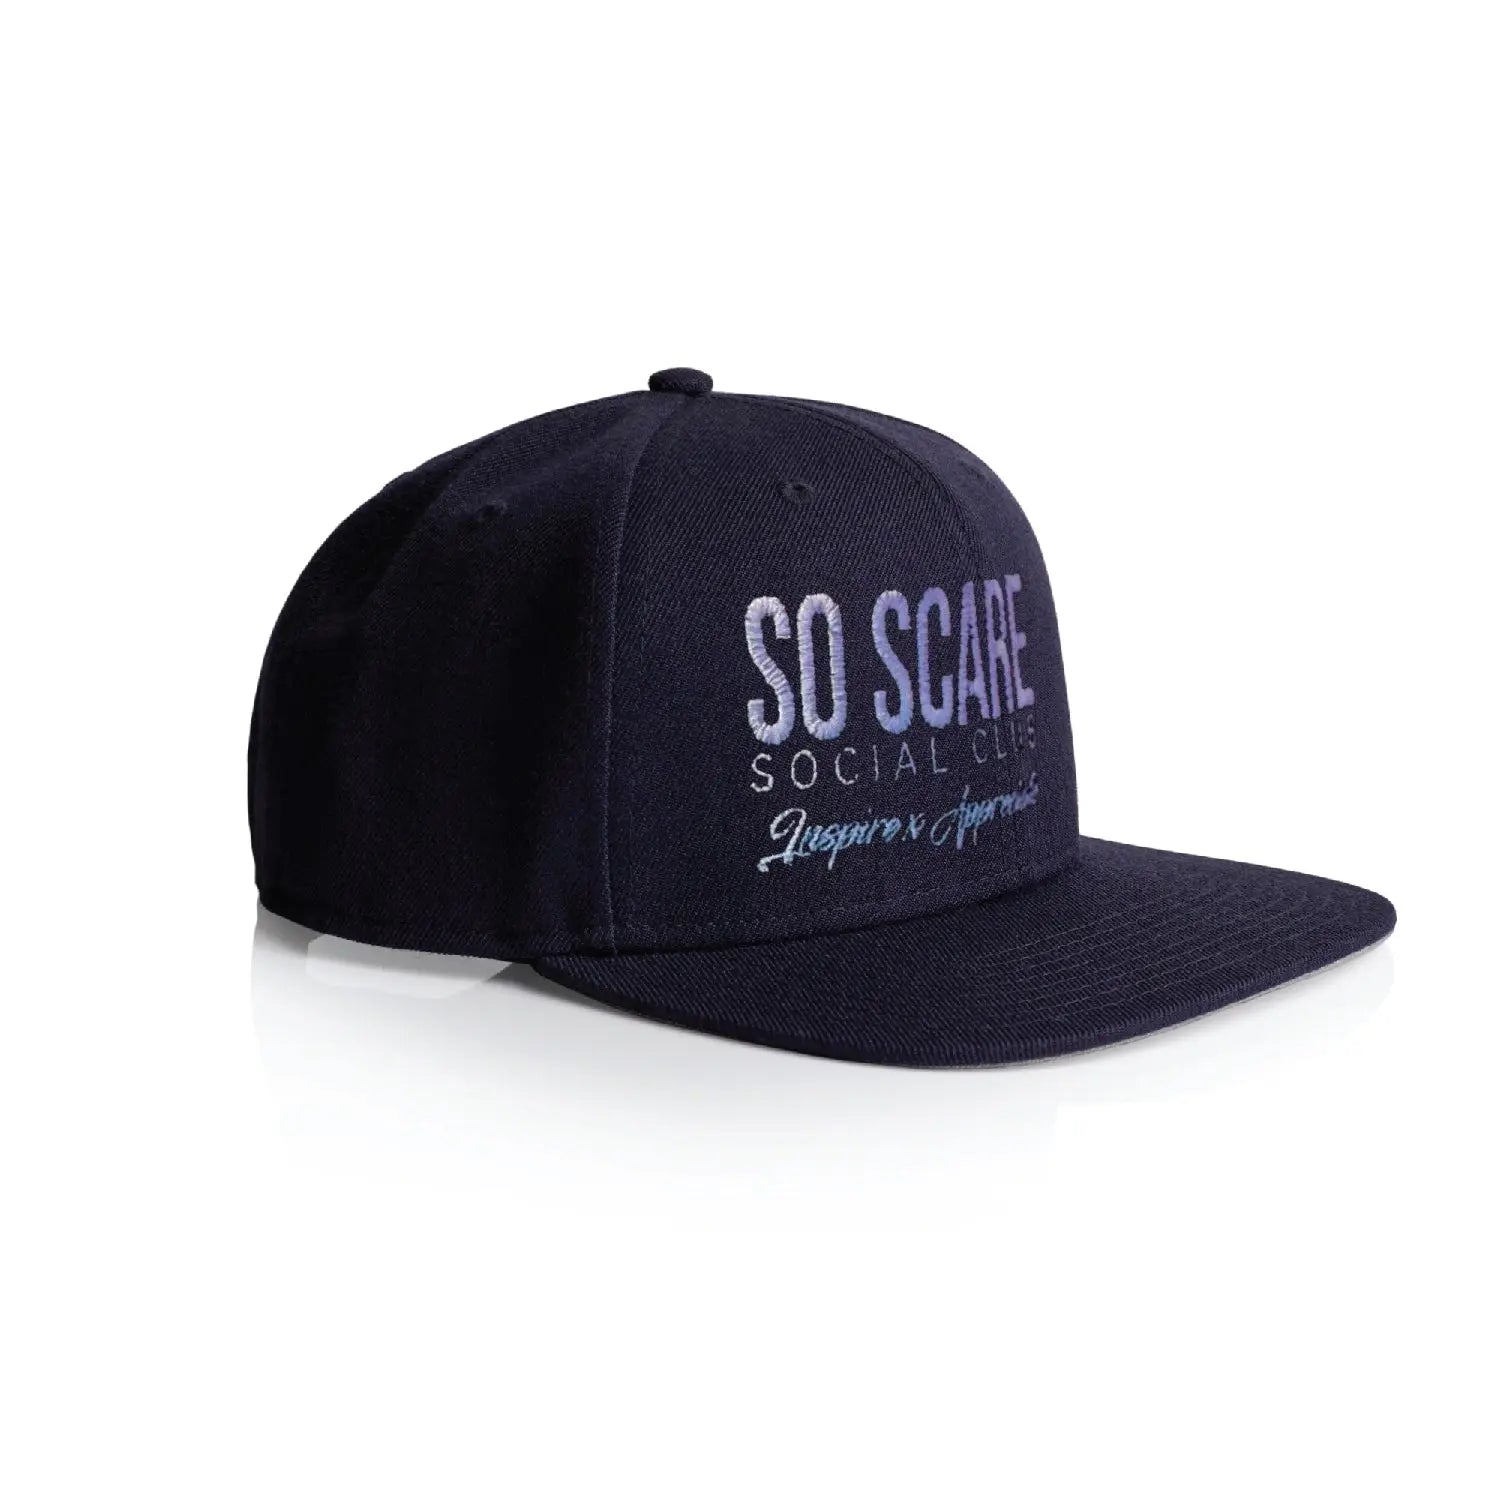 SNAPBACK HAT - NAVY SO SCARE SOCIAL CLUB